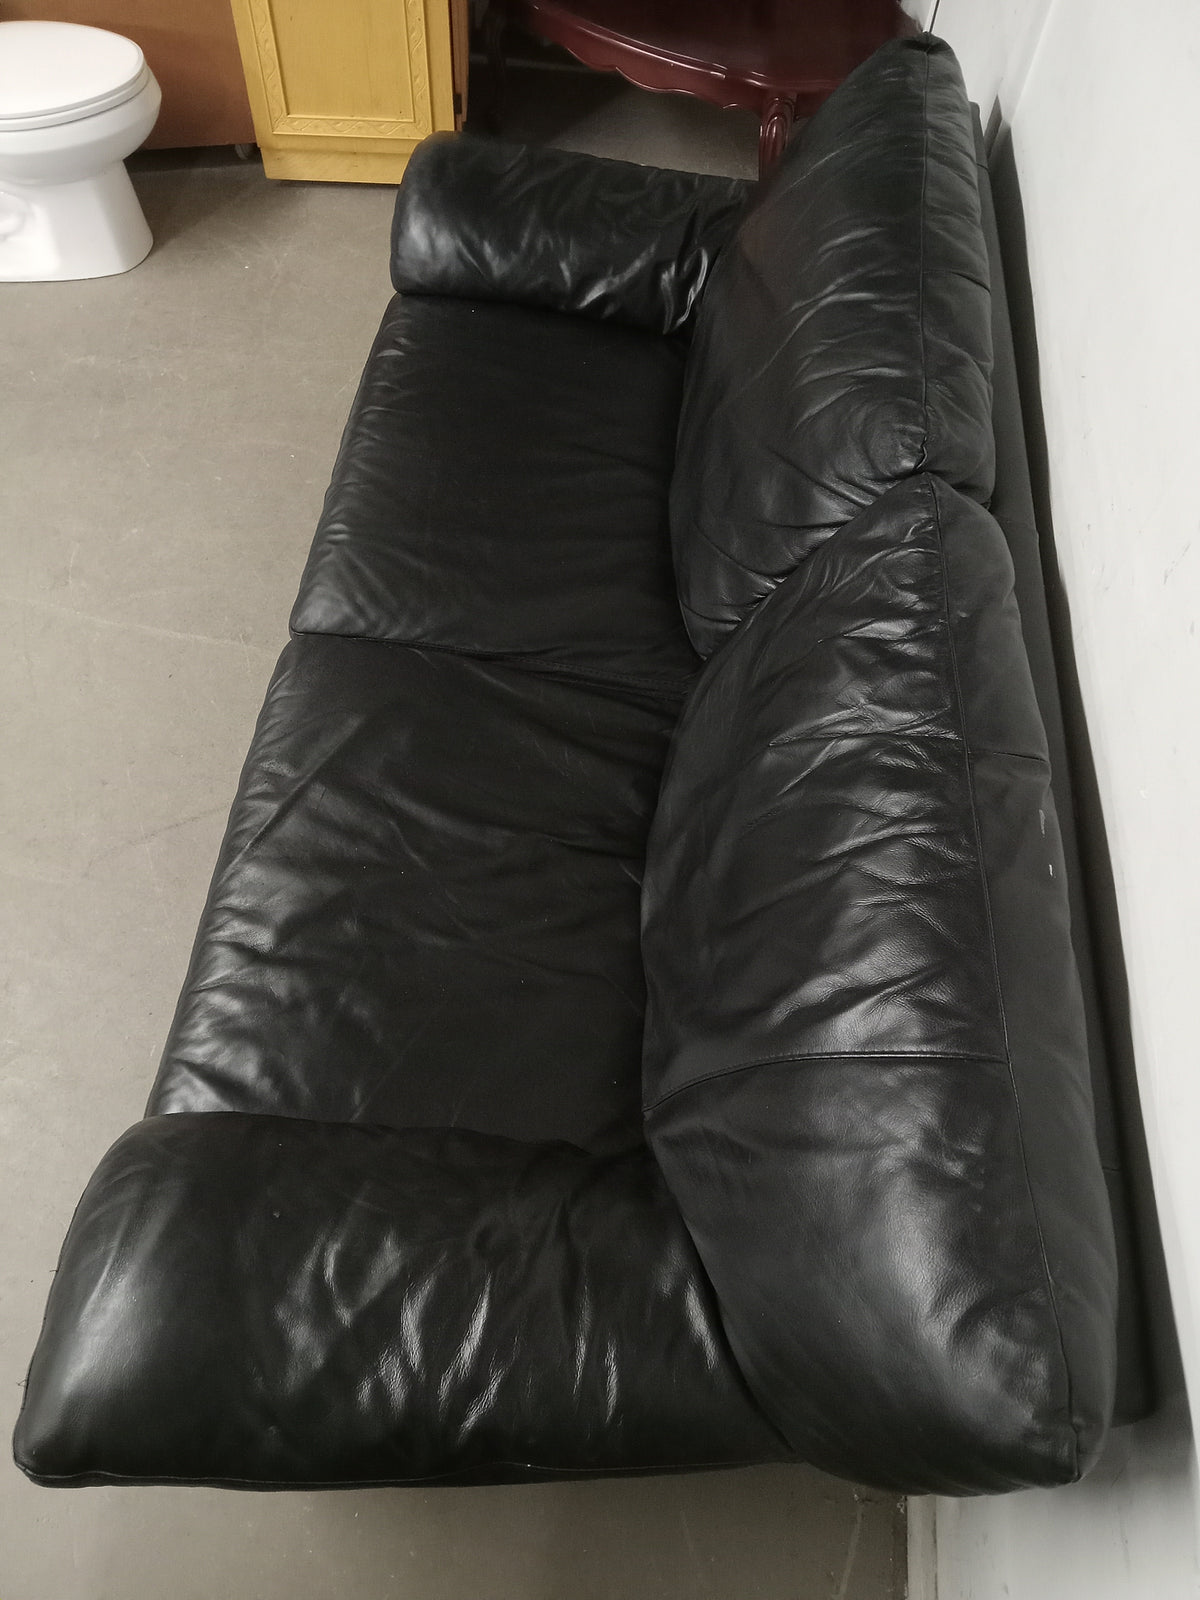 IKEA VRETA Black Sofa